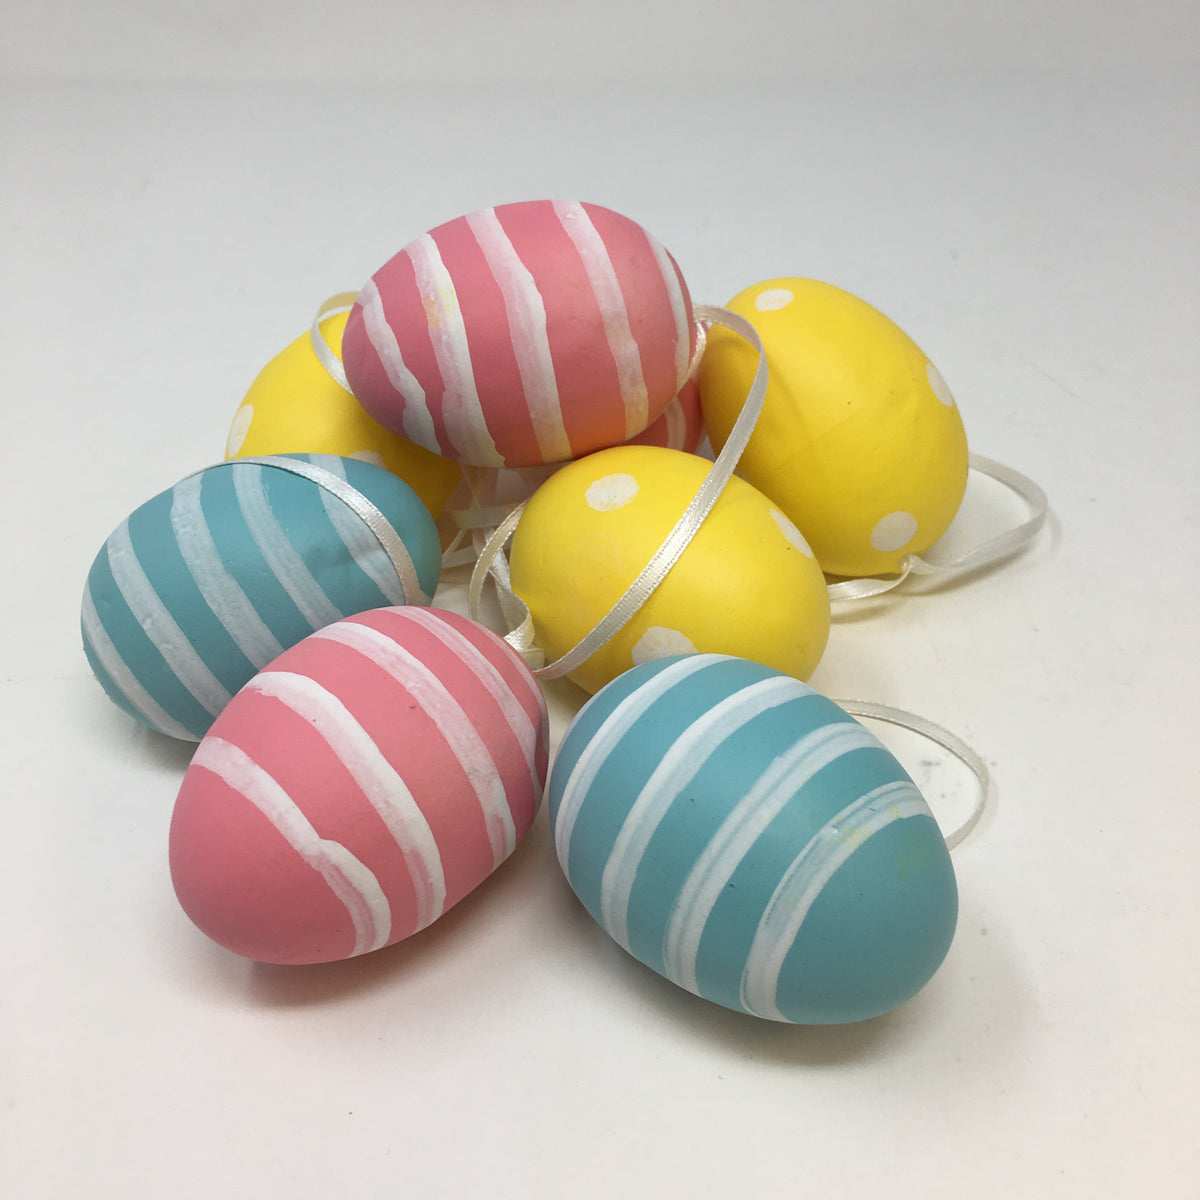 8pc Set Easter Egg Ornaments